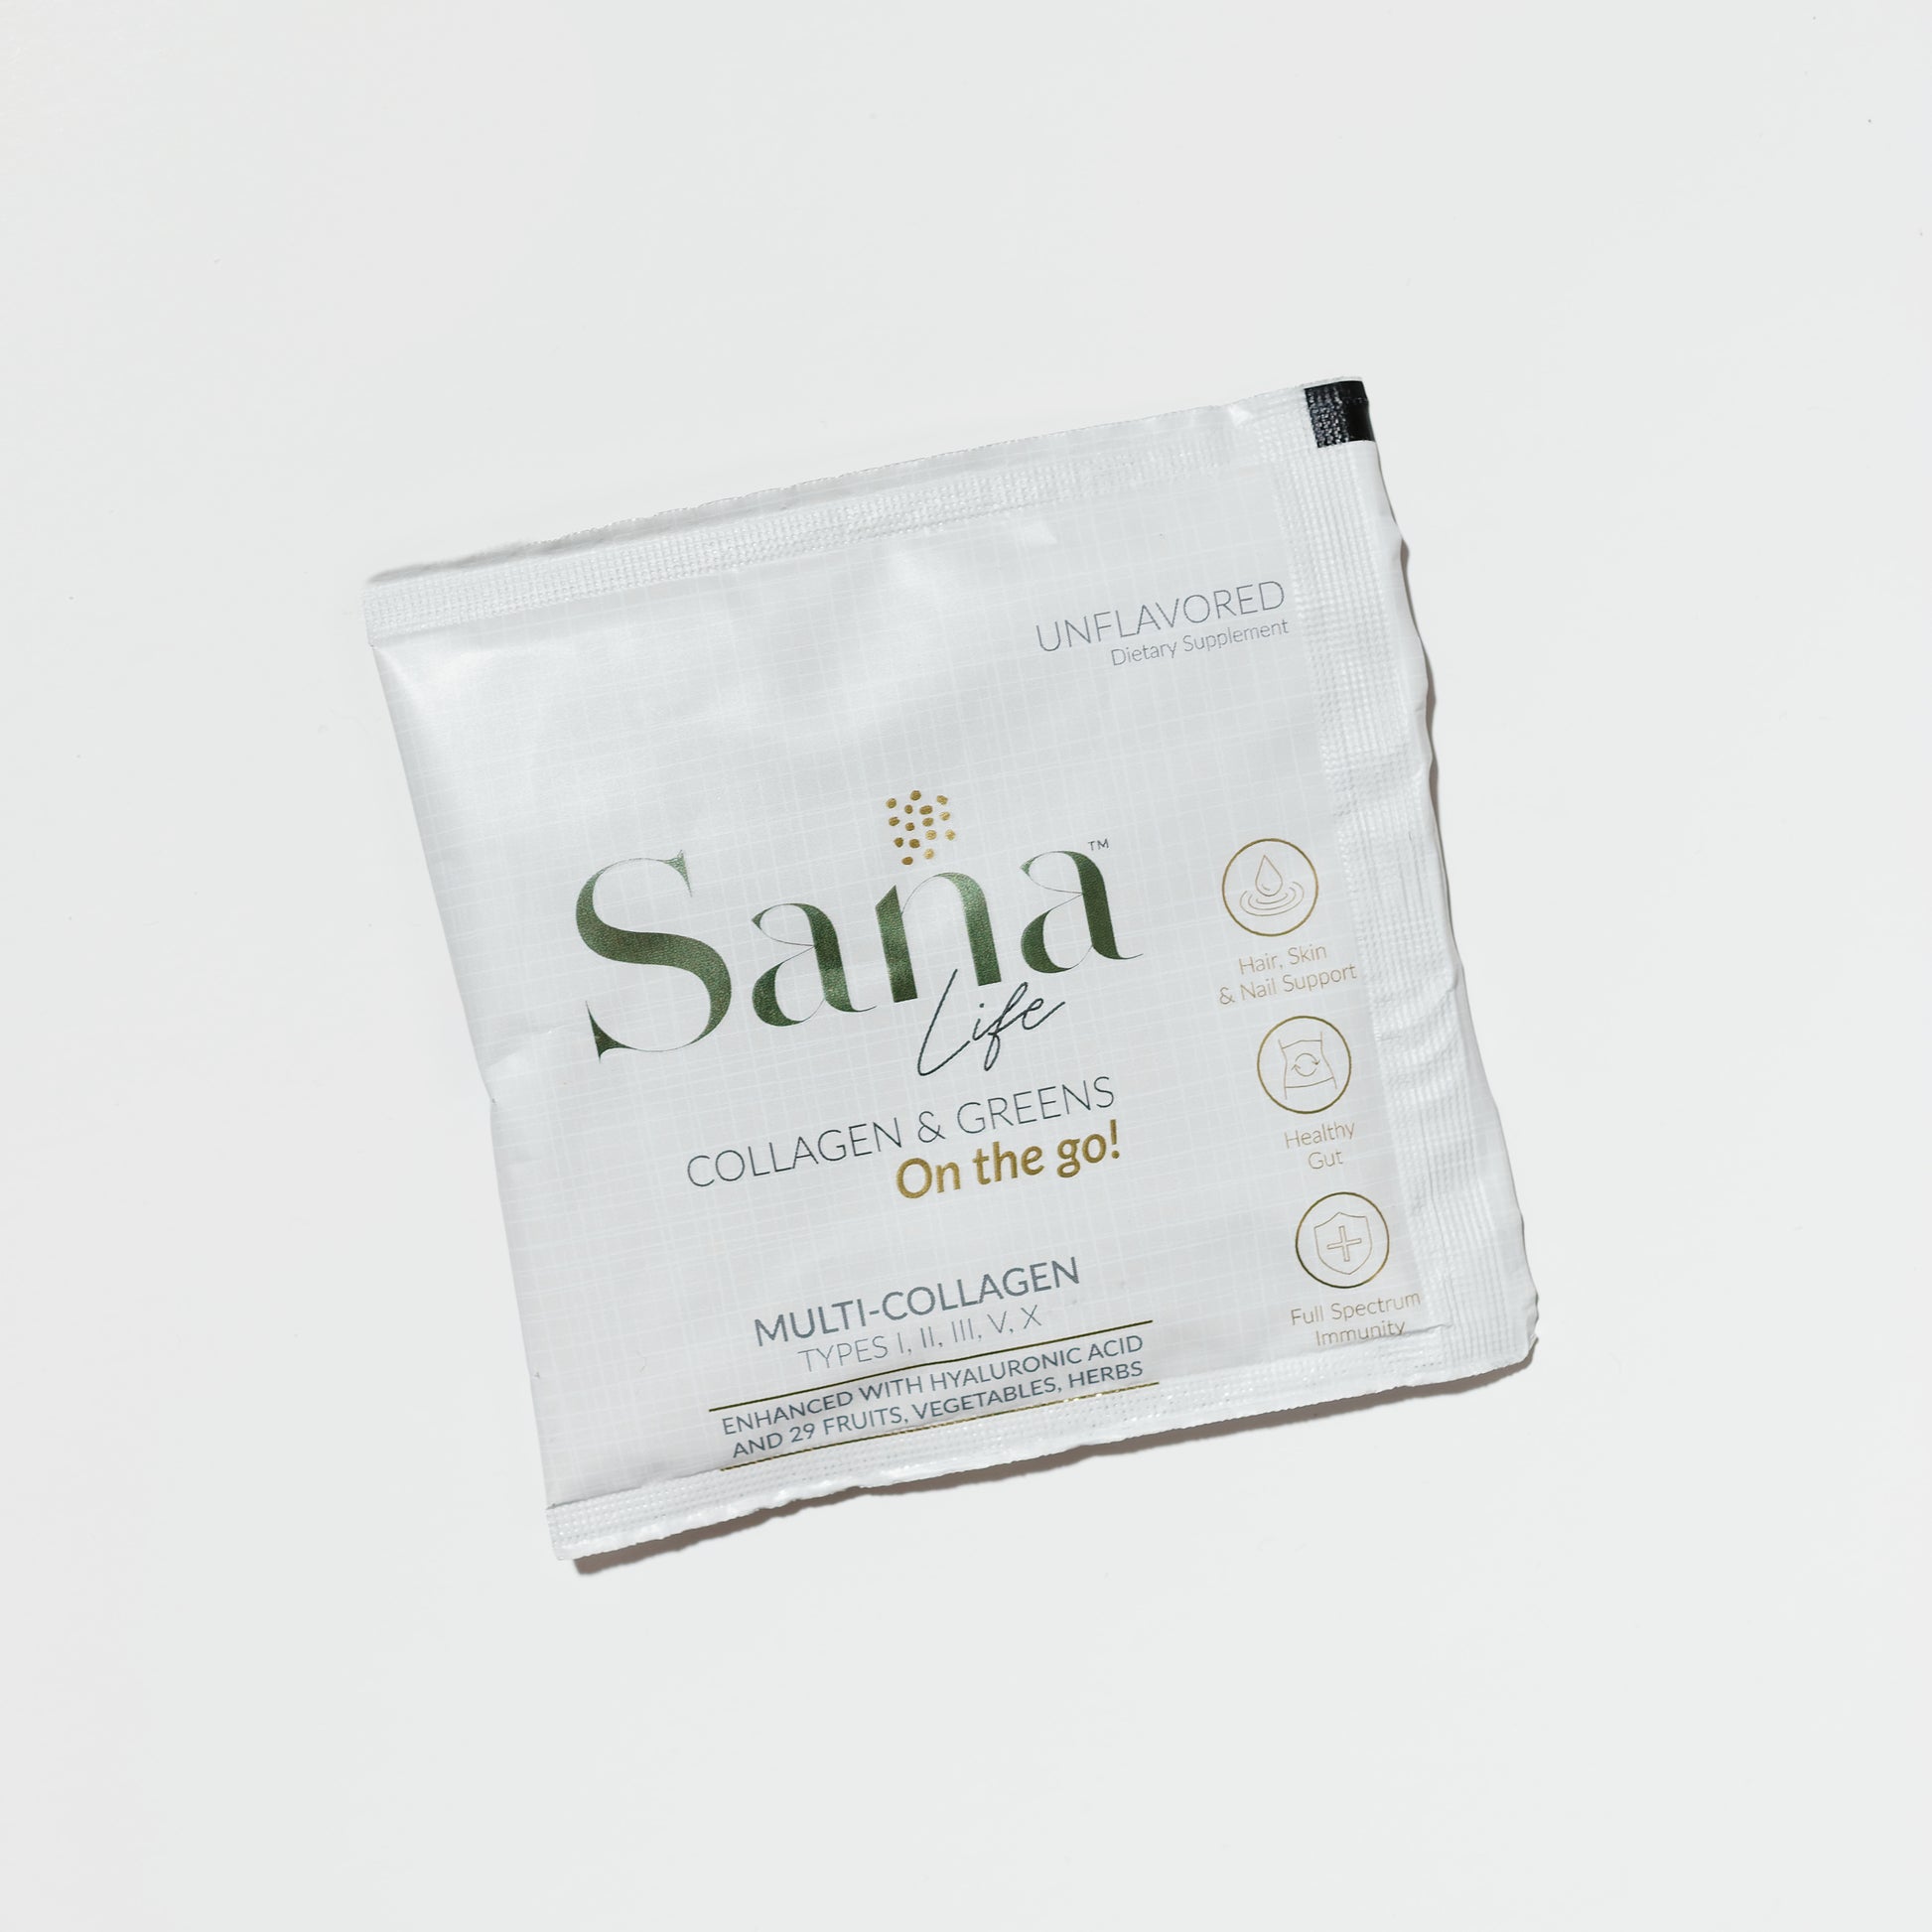 Sana Life Unflavored Collagen & Greens – Sana Life ®